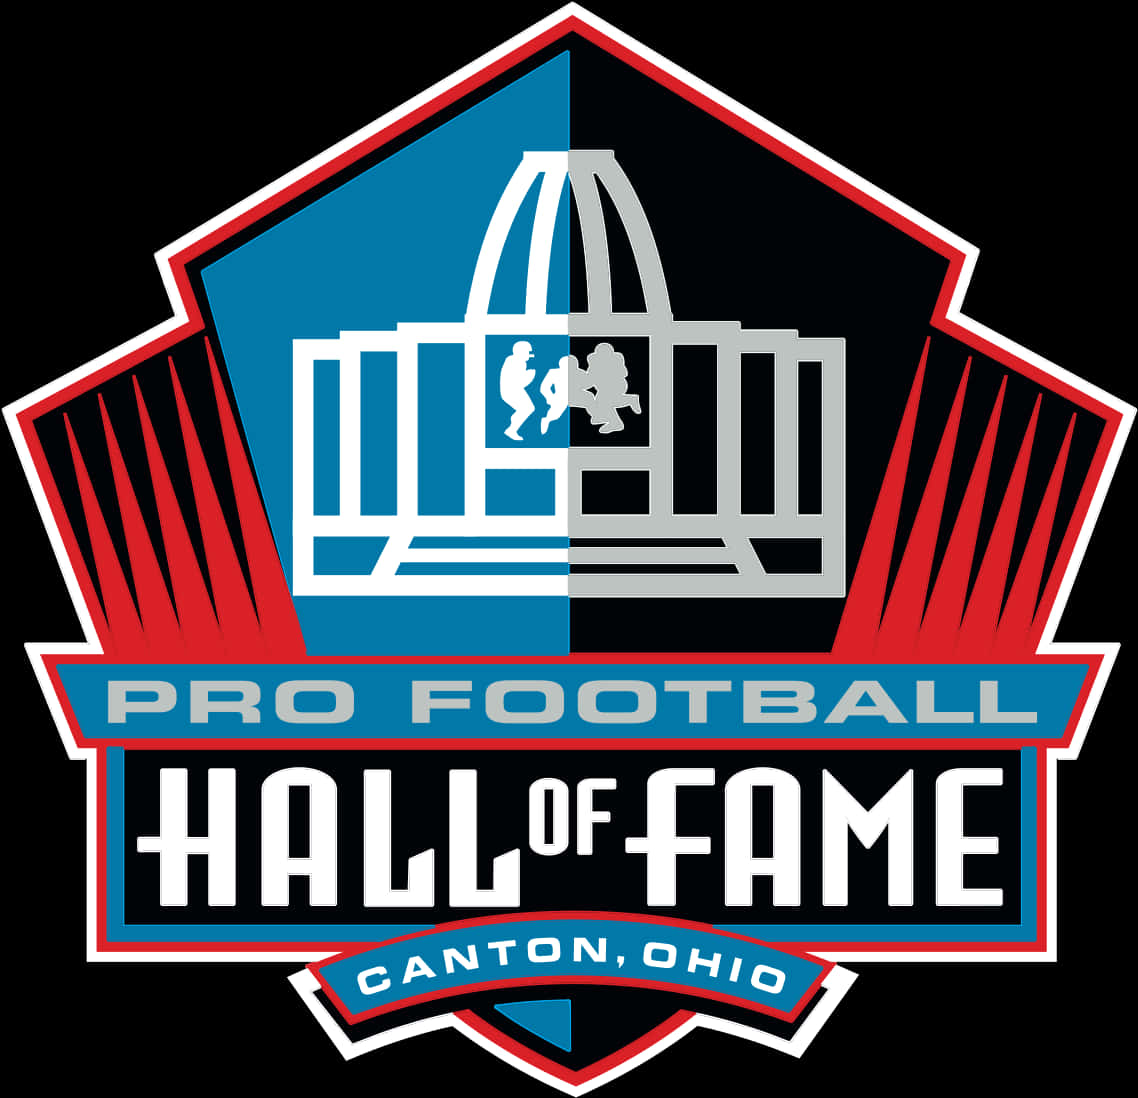 Pro Football Hallof Fame Logo PNG